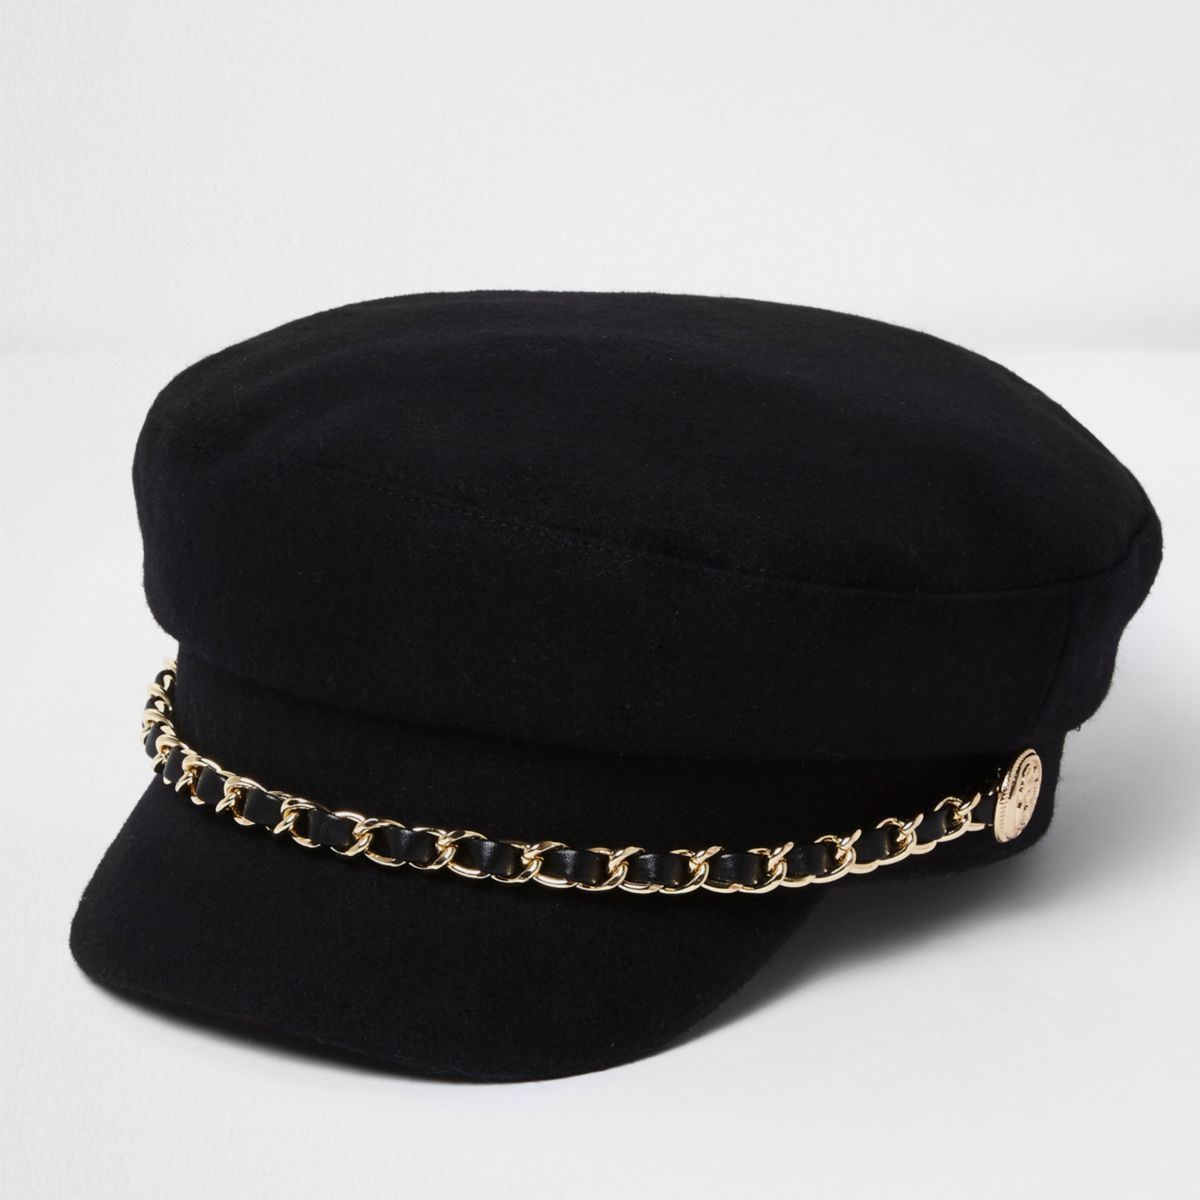 Black chain trim baker boy hat - Hats - Accessories - women